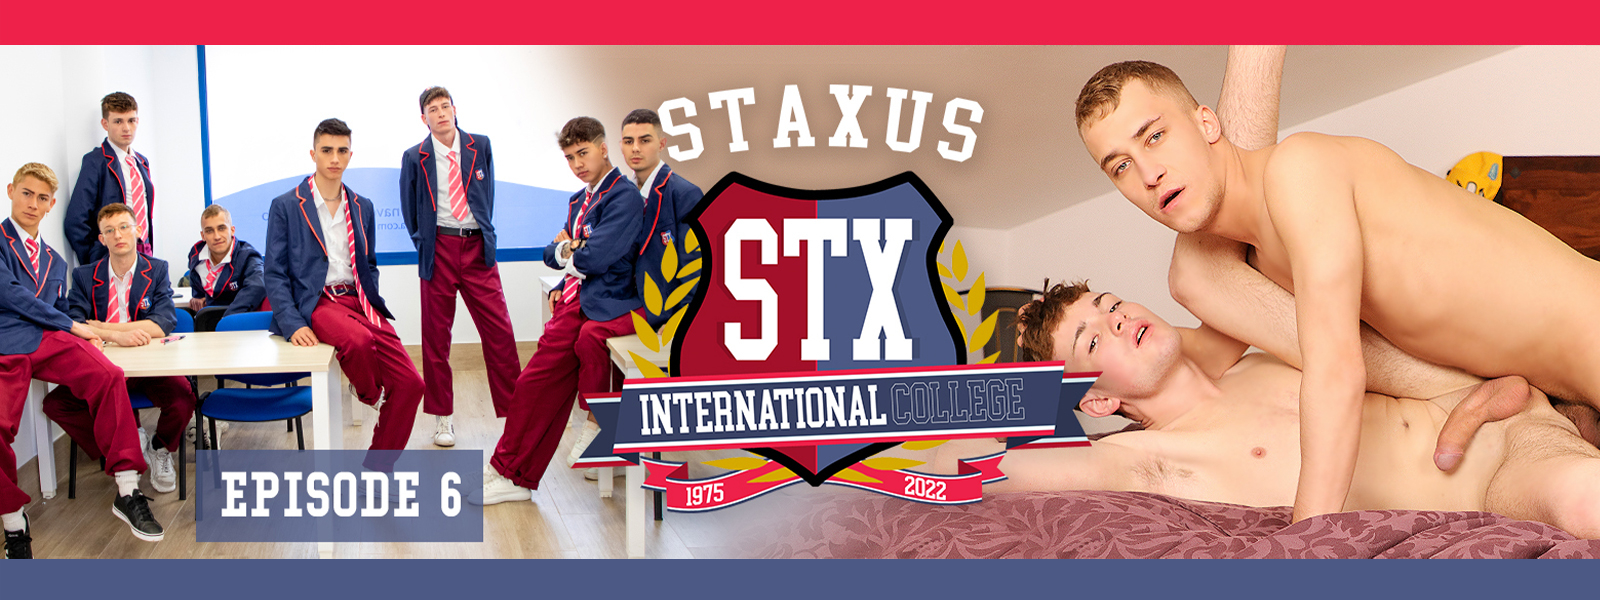 Staxus International College Ep.6